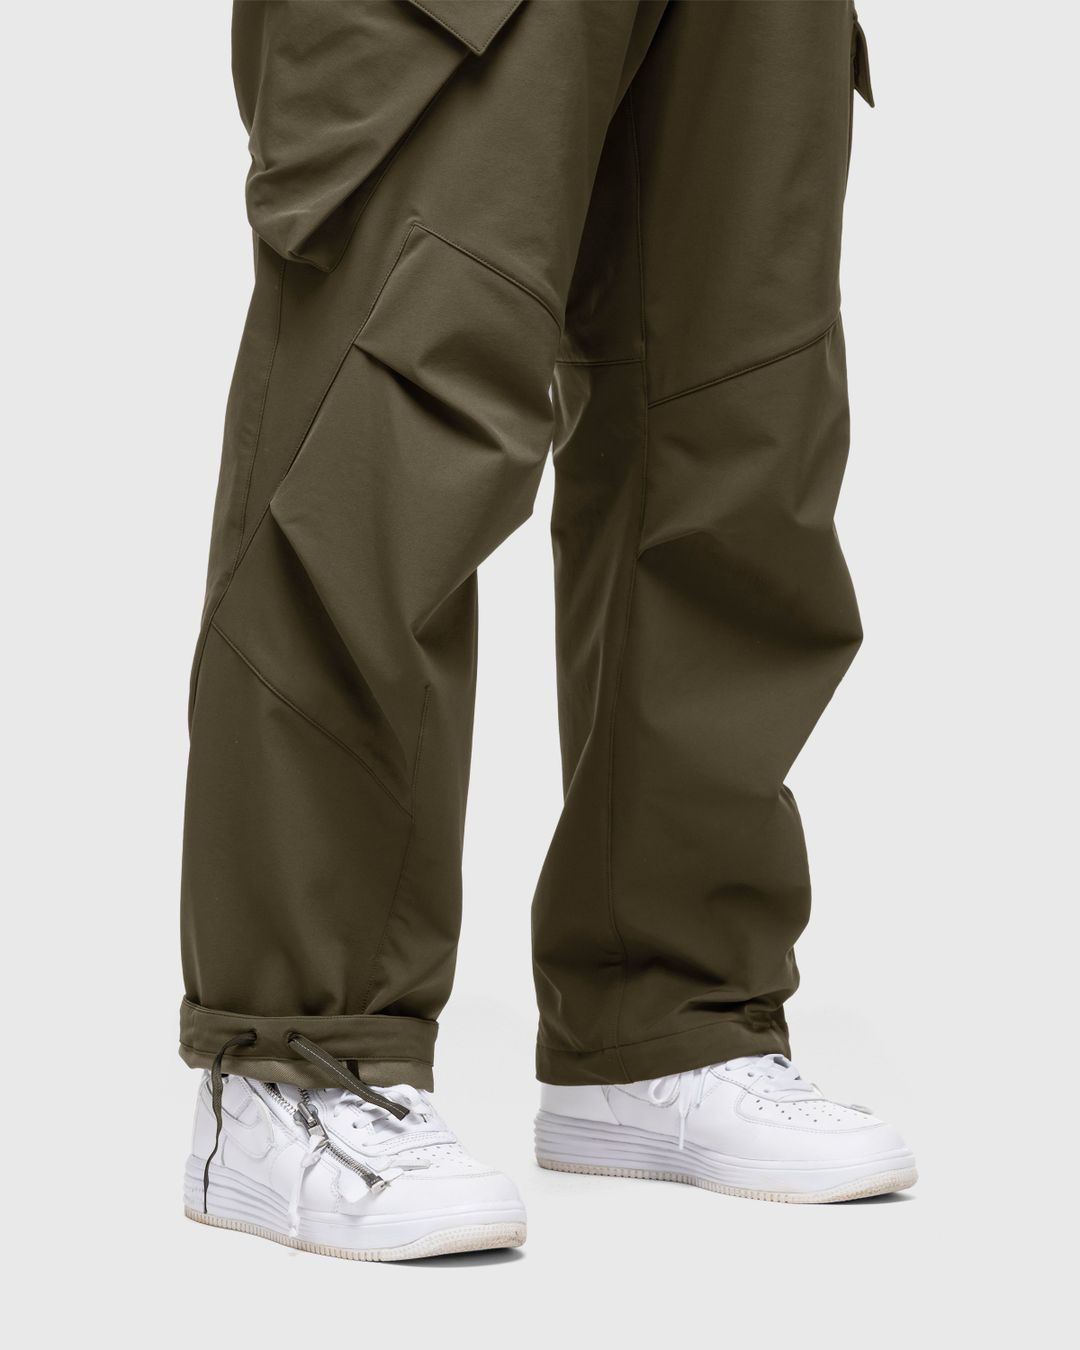 ACRONYM – P44-DS Cargo Pant Grey | Highsnobiety Shop